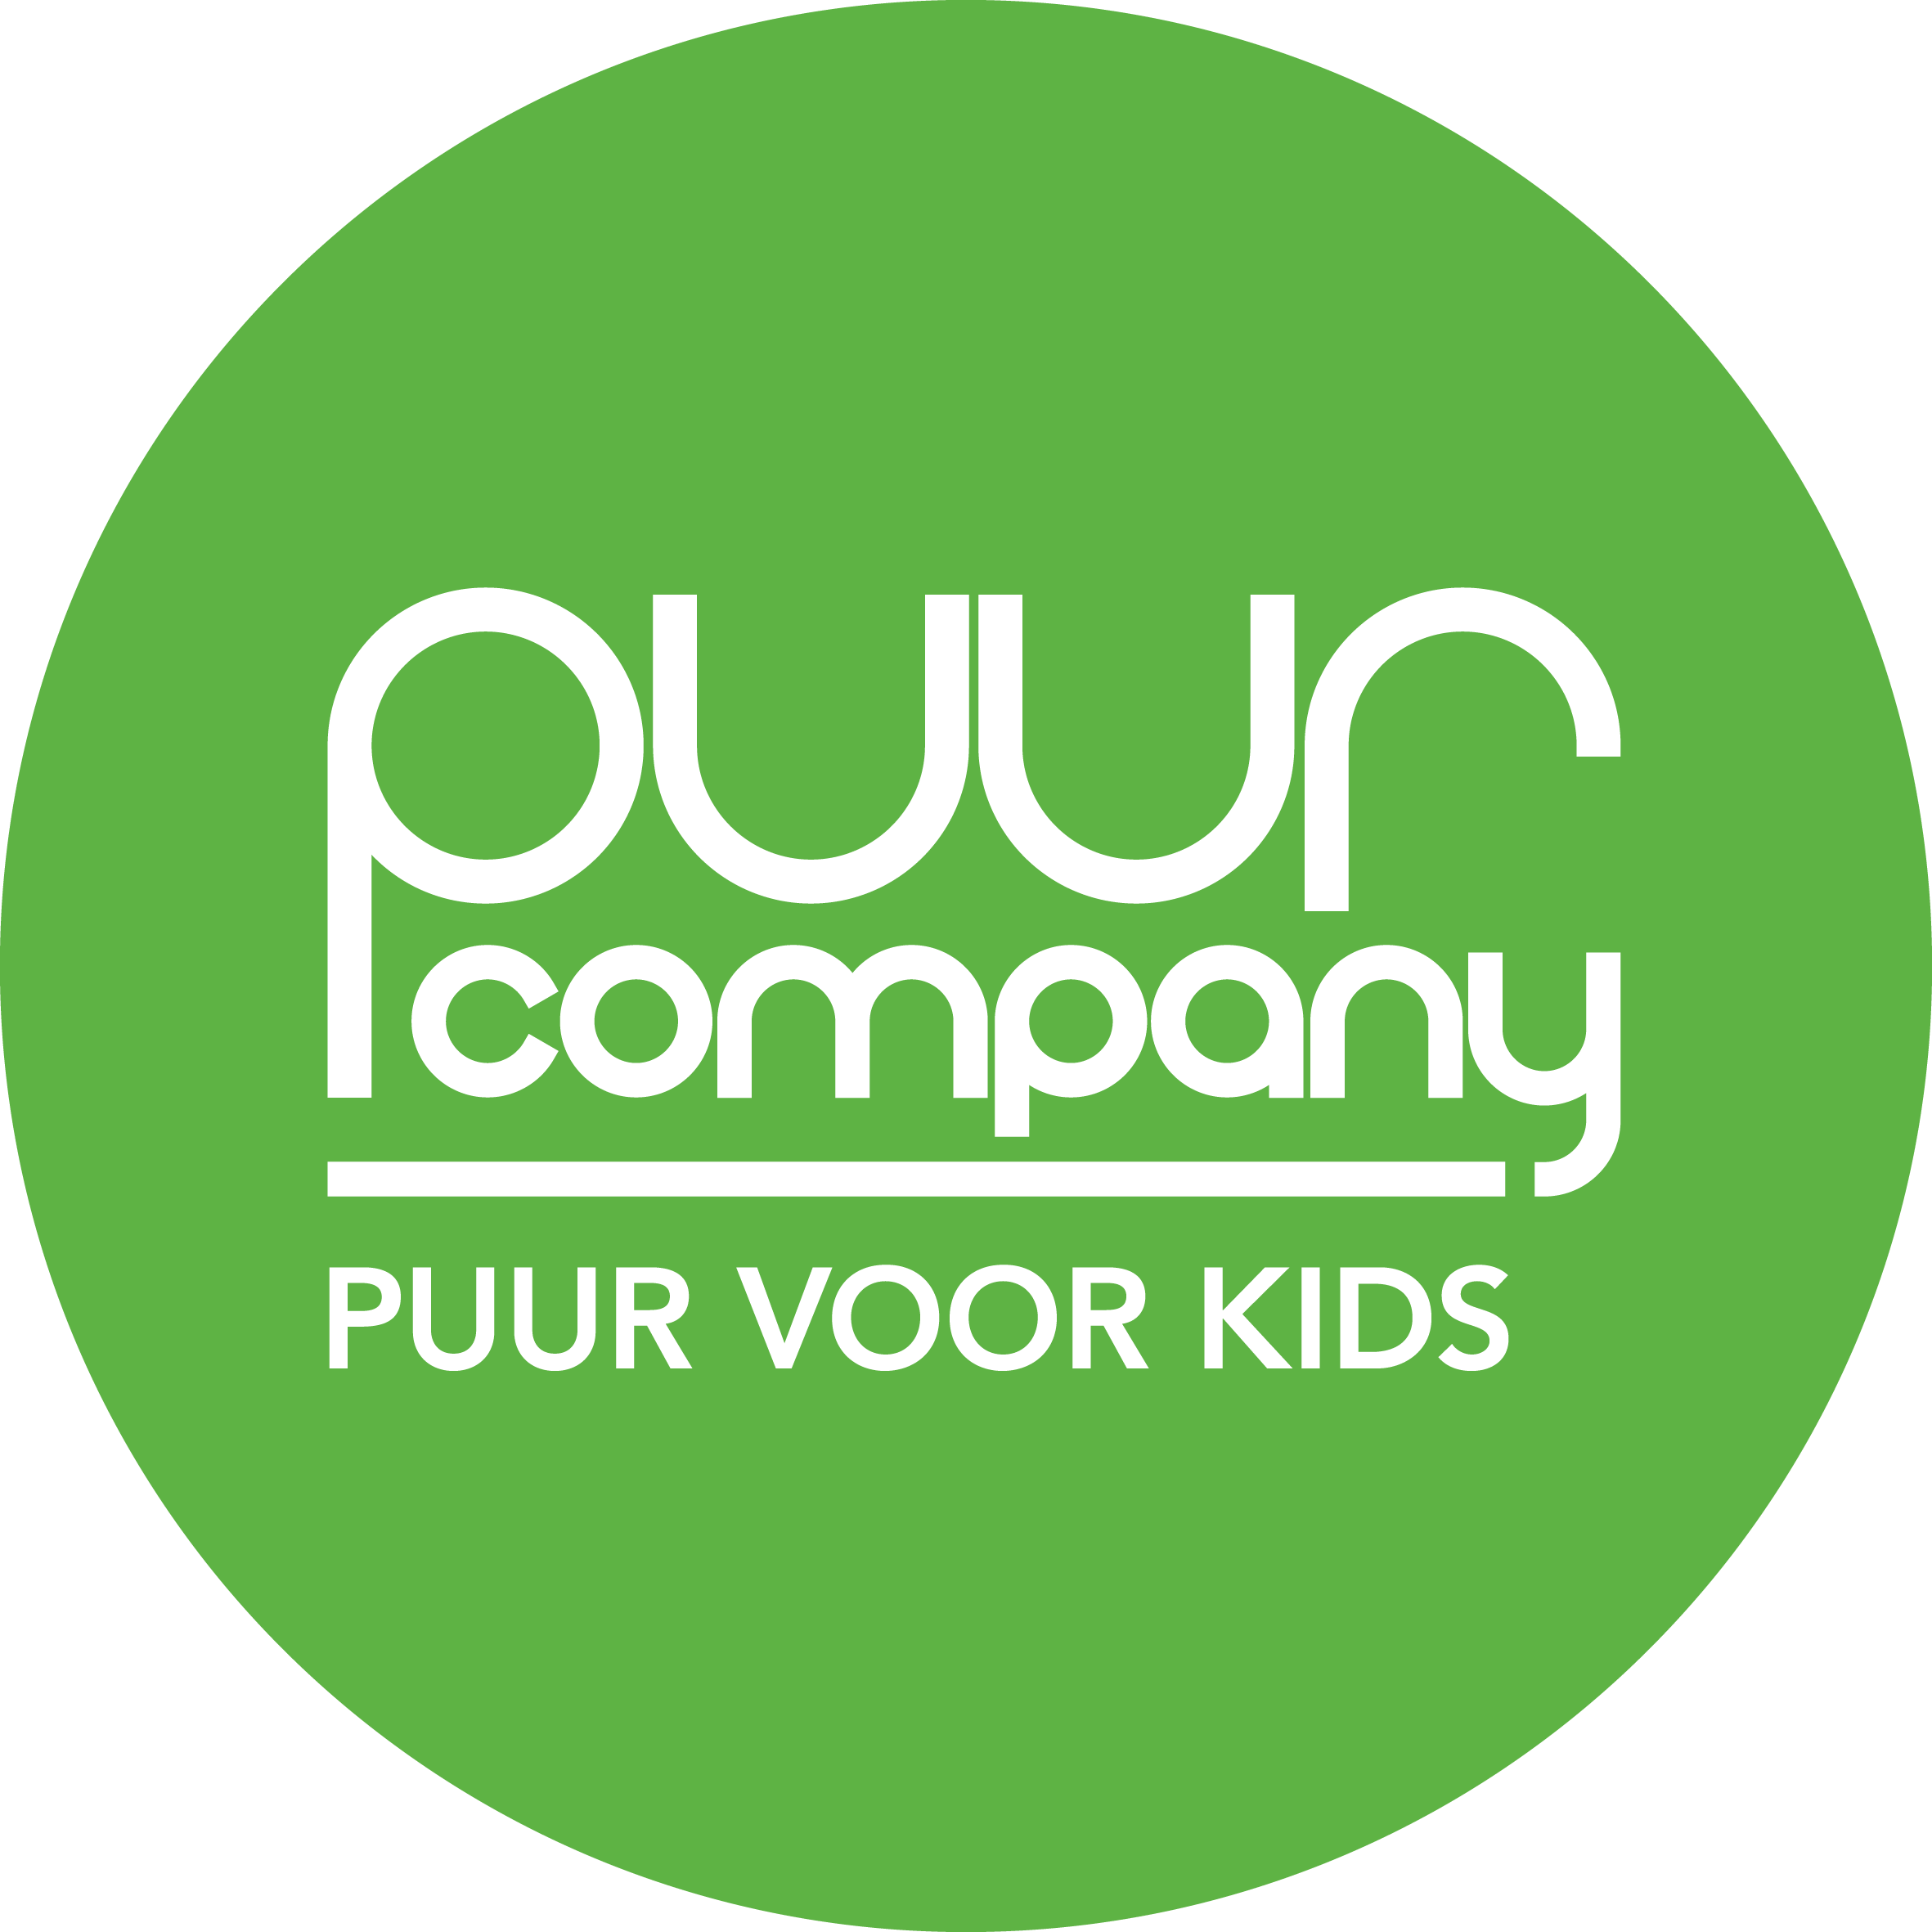 Puur Company logo.